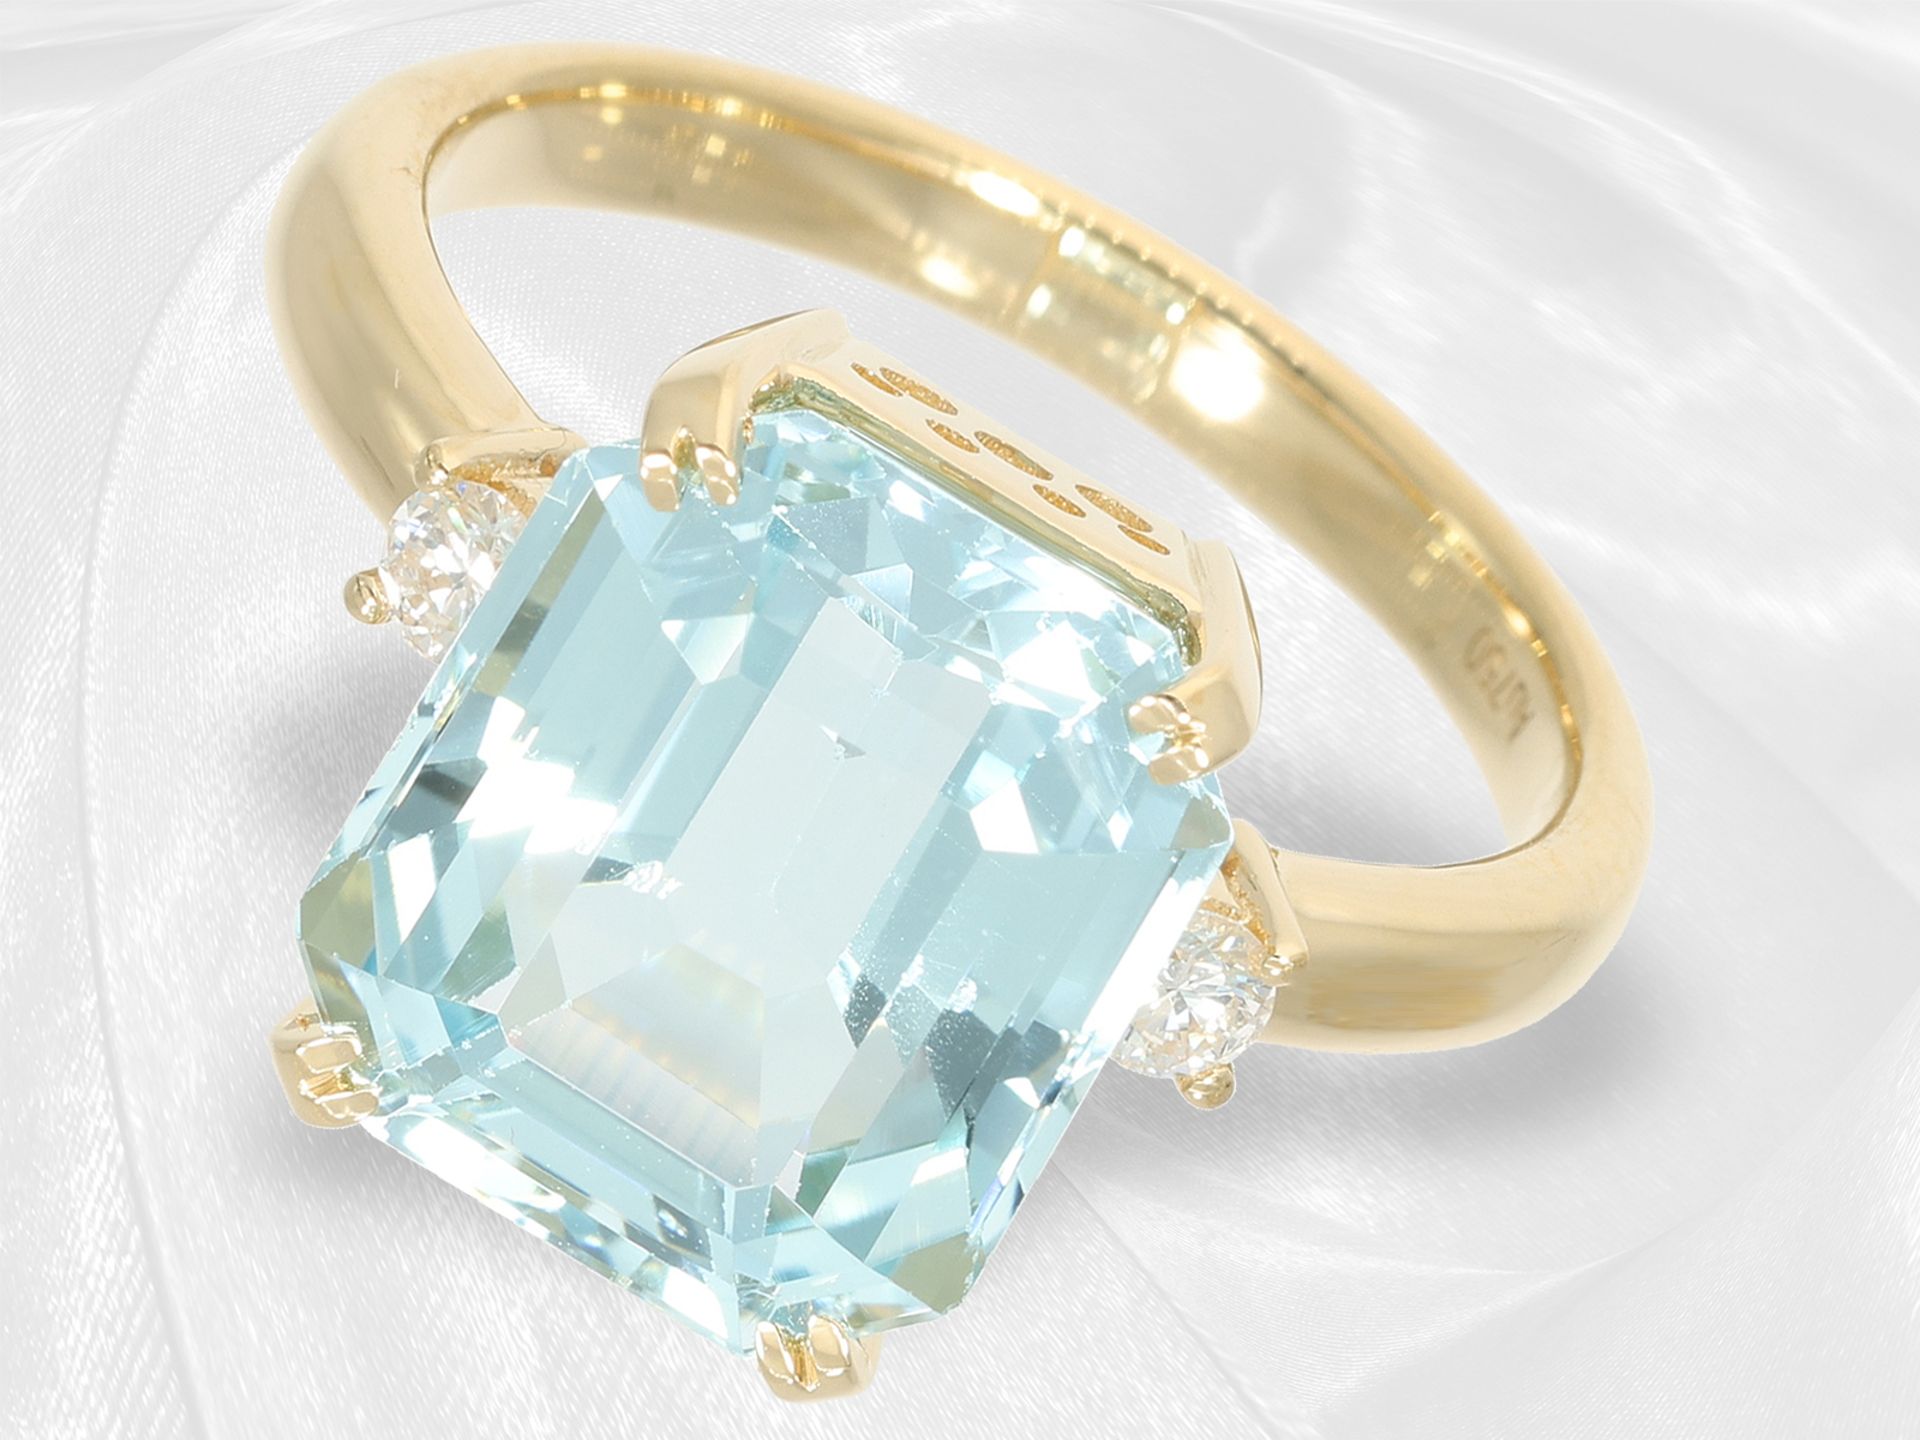 Aquamarine/brilliant-cut diamond goldsmith ring, 18K yellow gold - Image 4 of 5